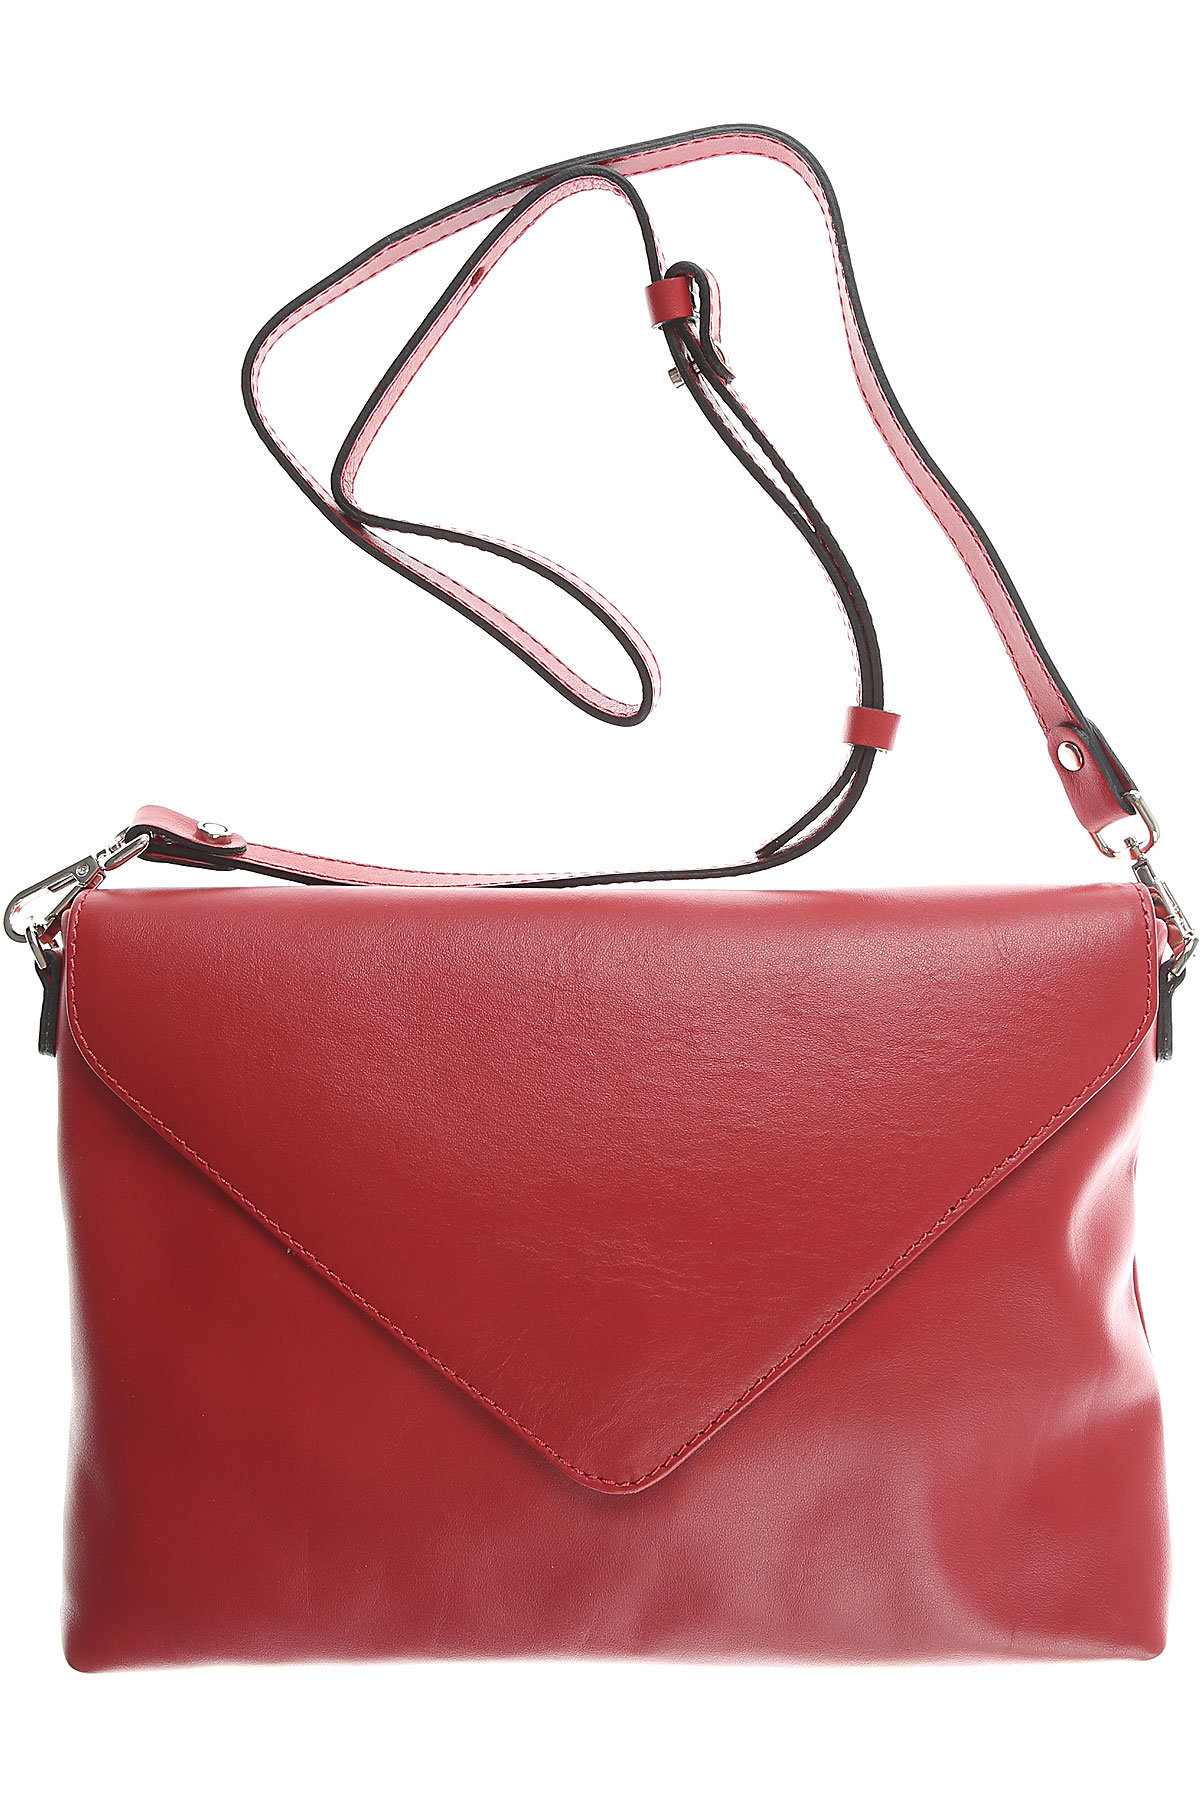 Gianni ChiariniGianni Chiarini Shoulder Bag for Women On Sale in Outlet ...